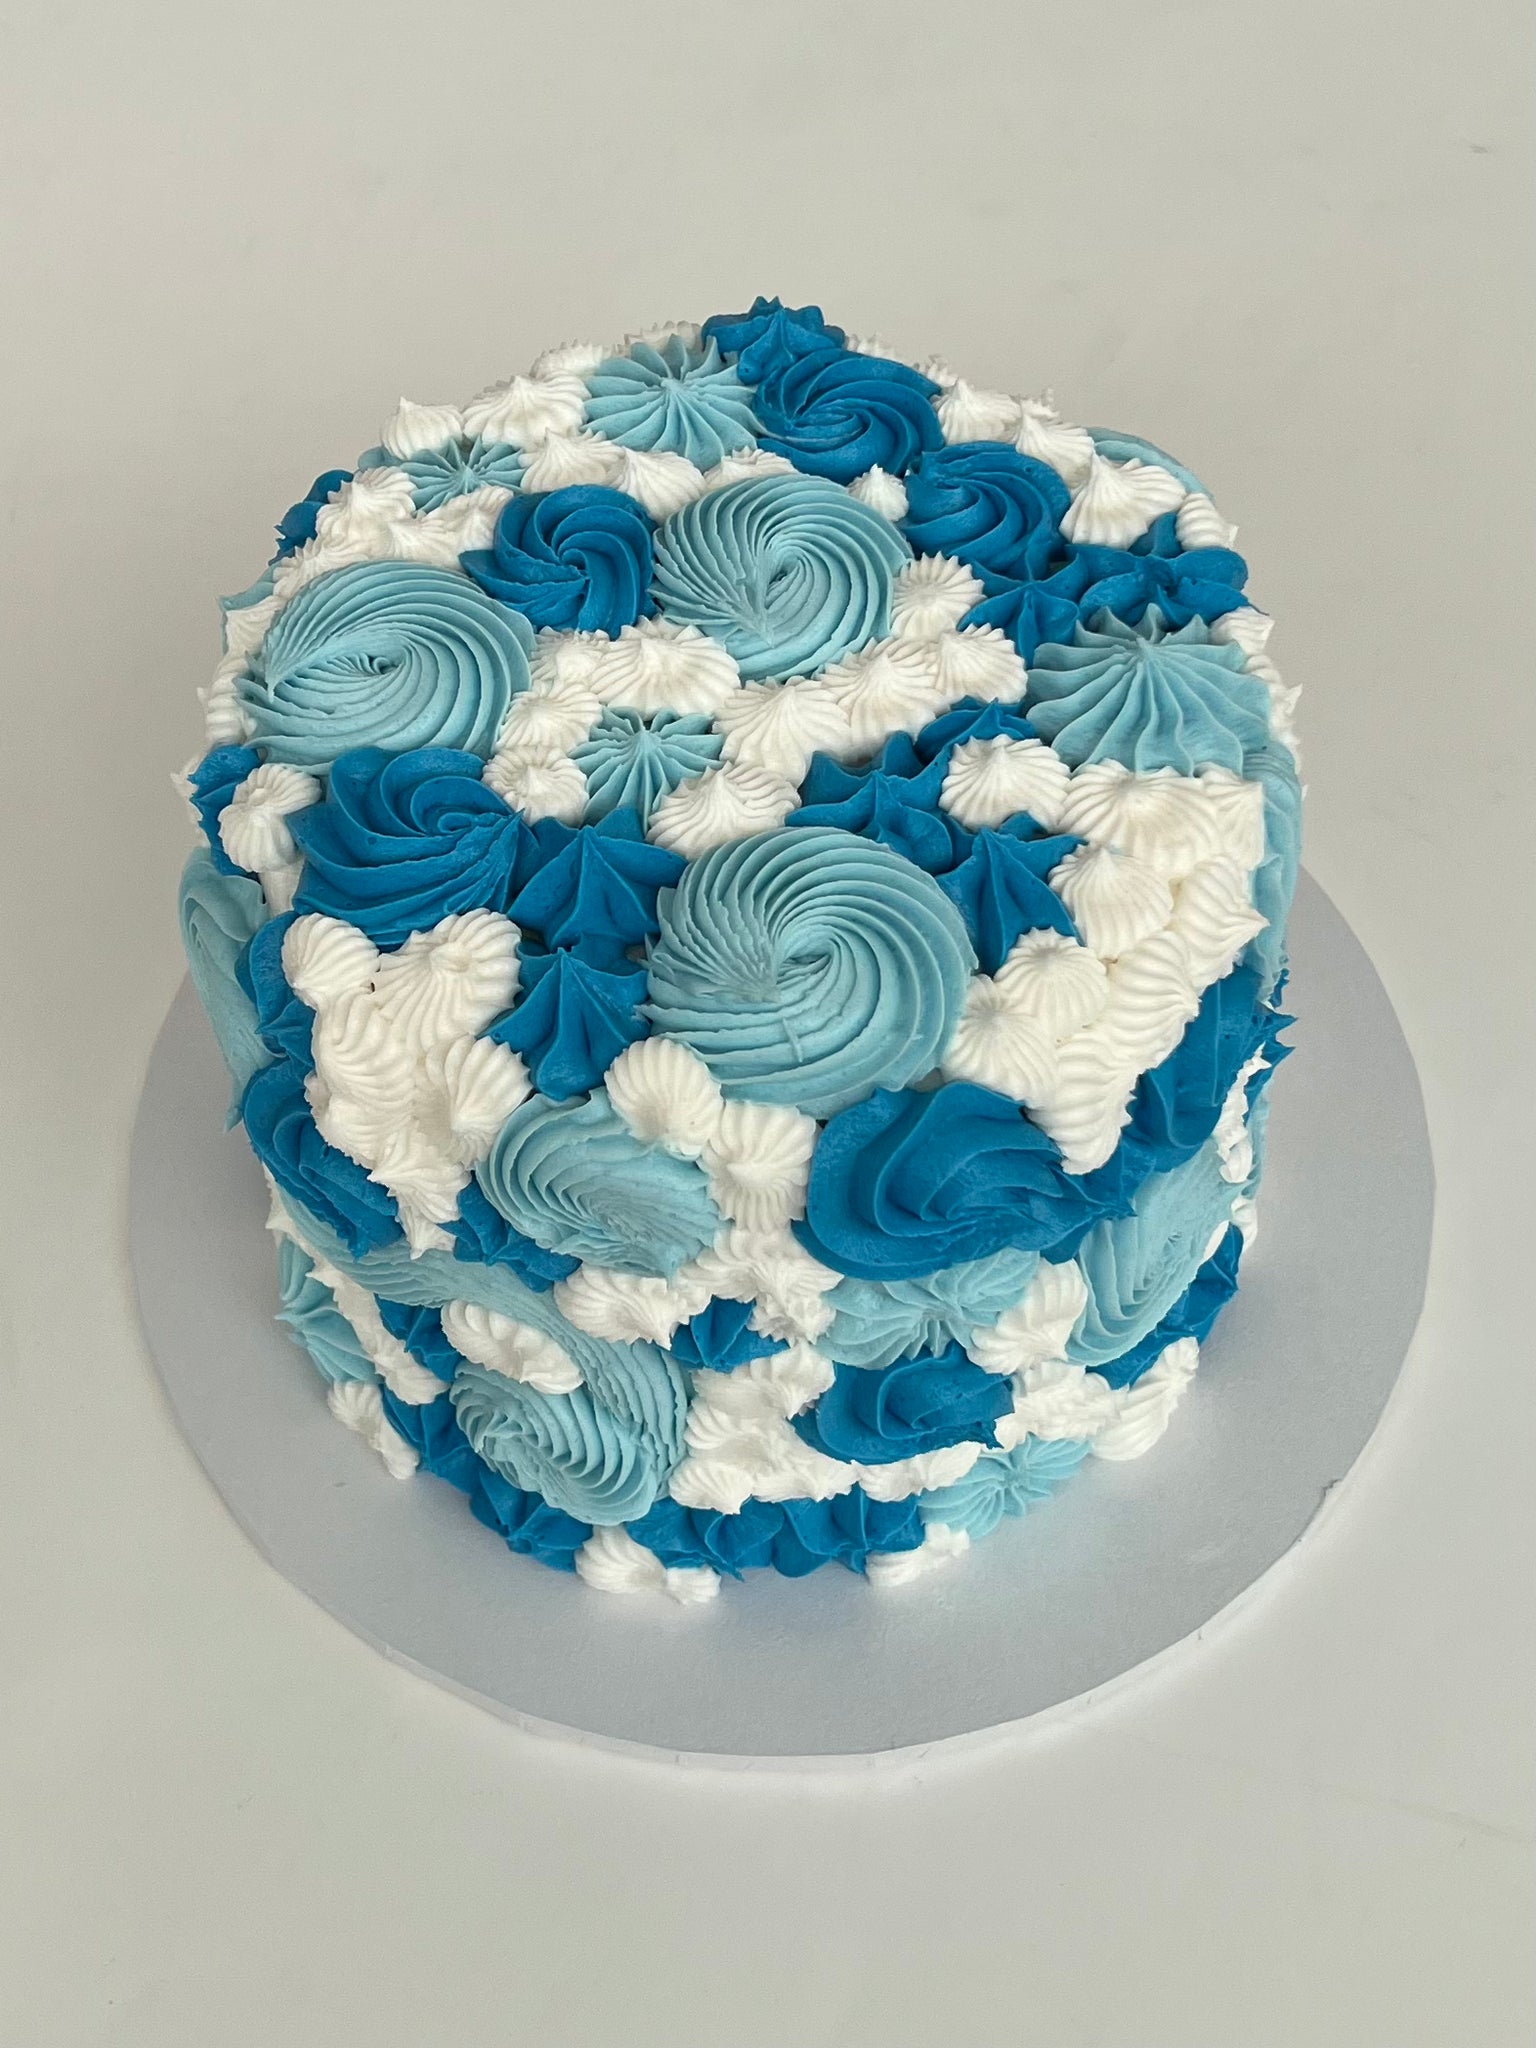 Mini Blue Groovy Cake